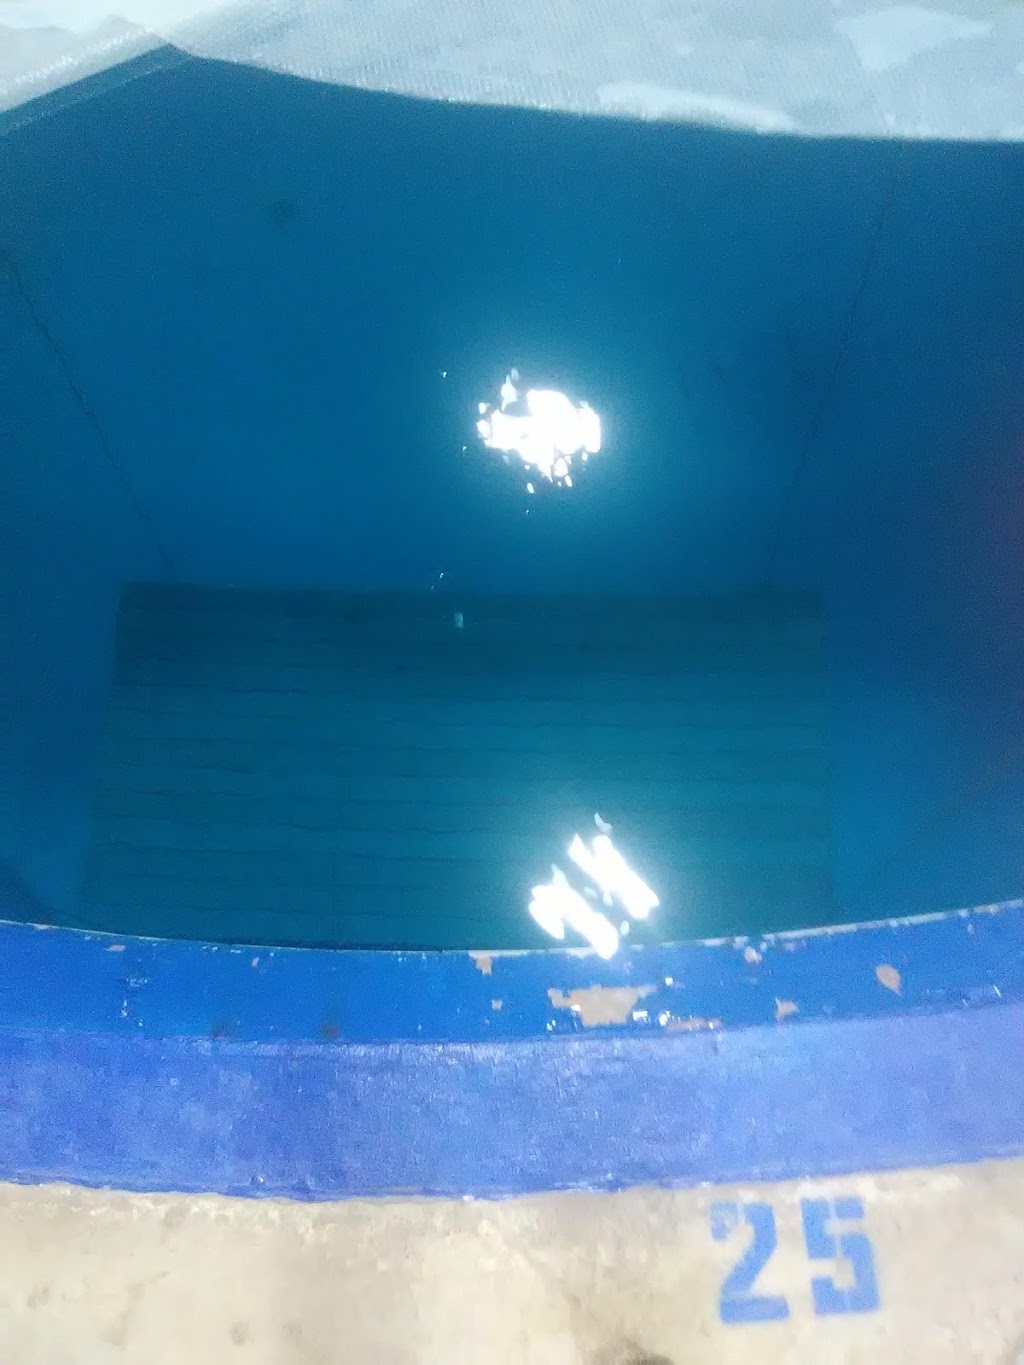 Deep Blue Divers Aquatic Center | 1313 Progress Rd, Fort Wayne, IN 46808, USA | Phone: (260) 490-3337